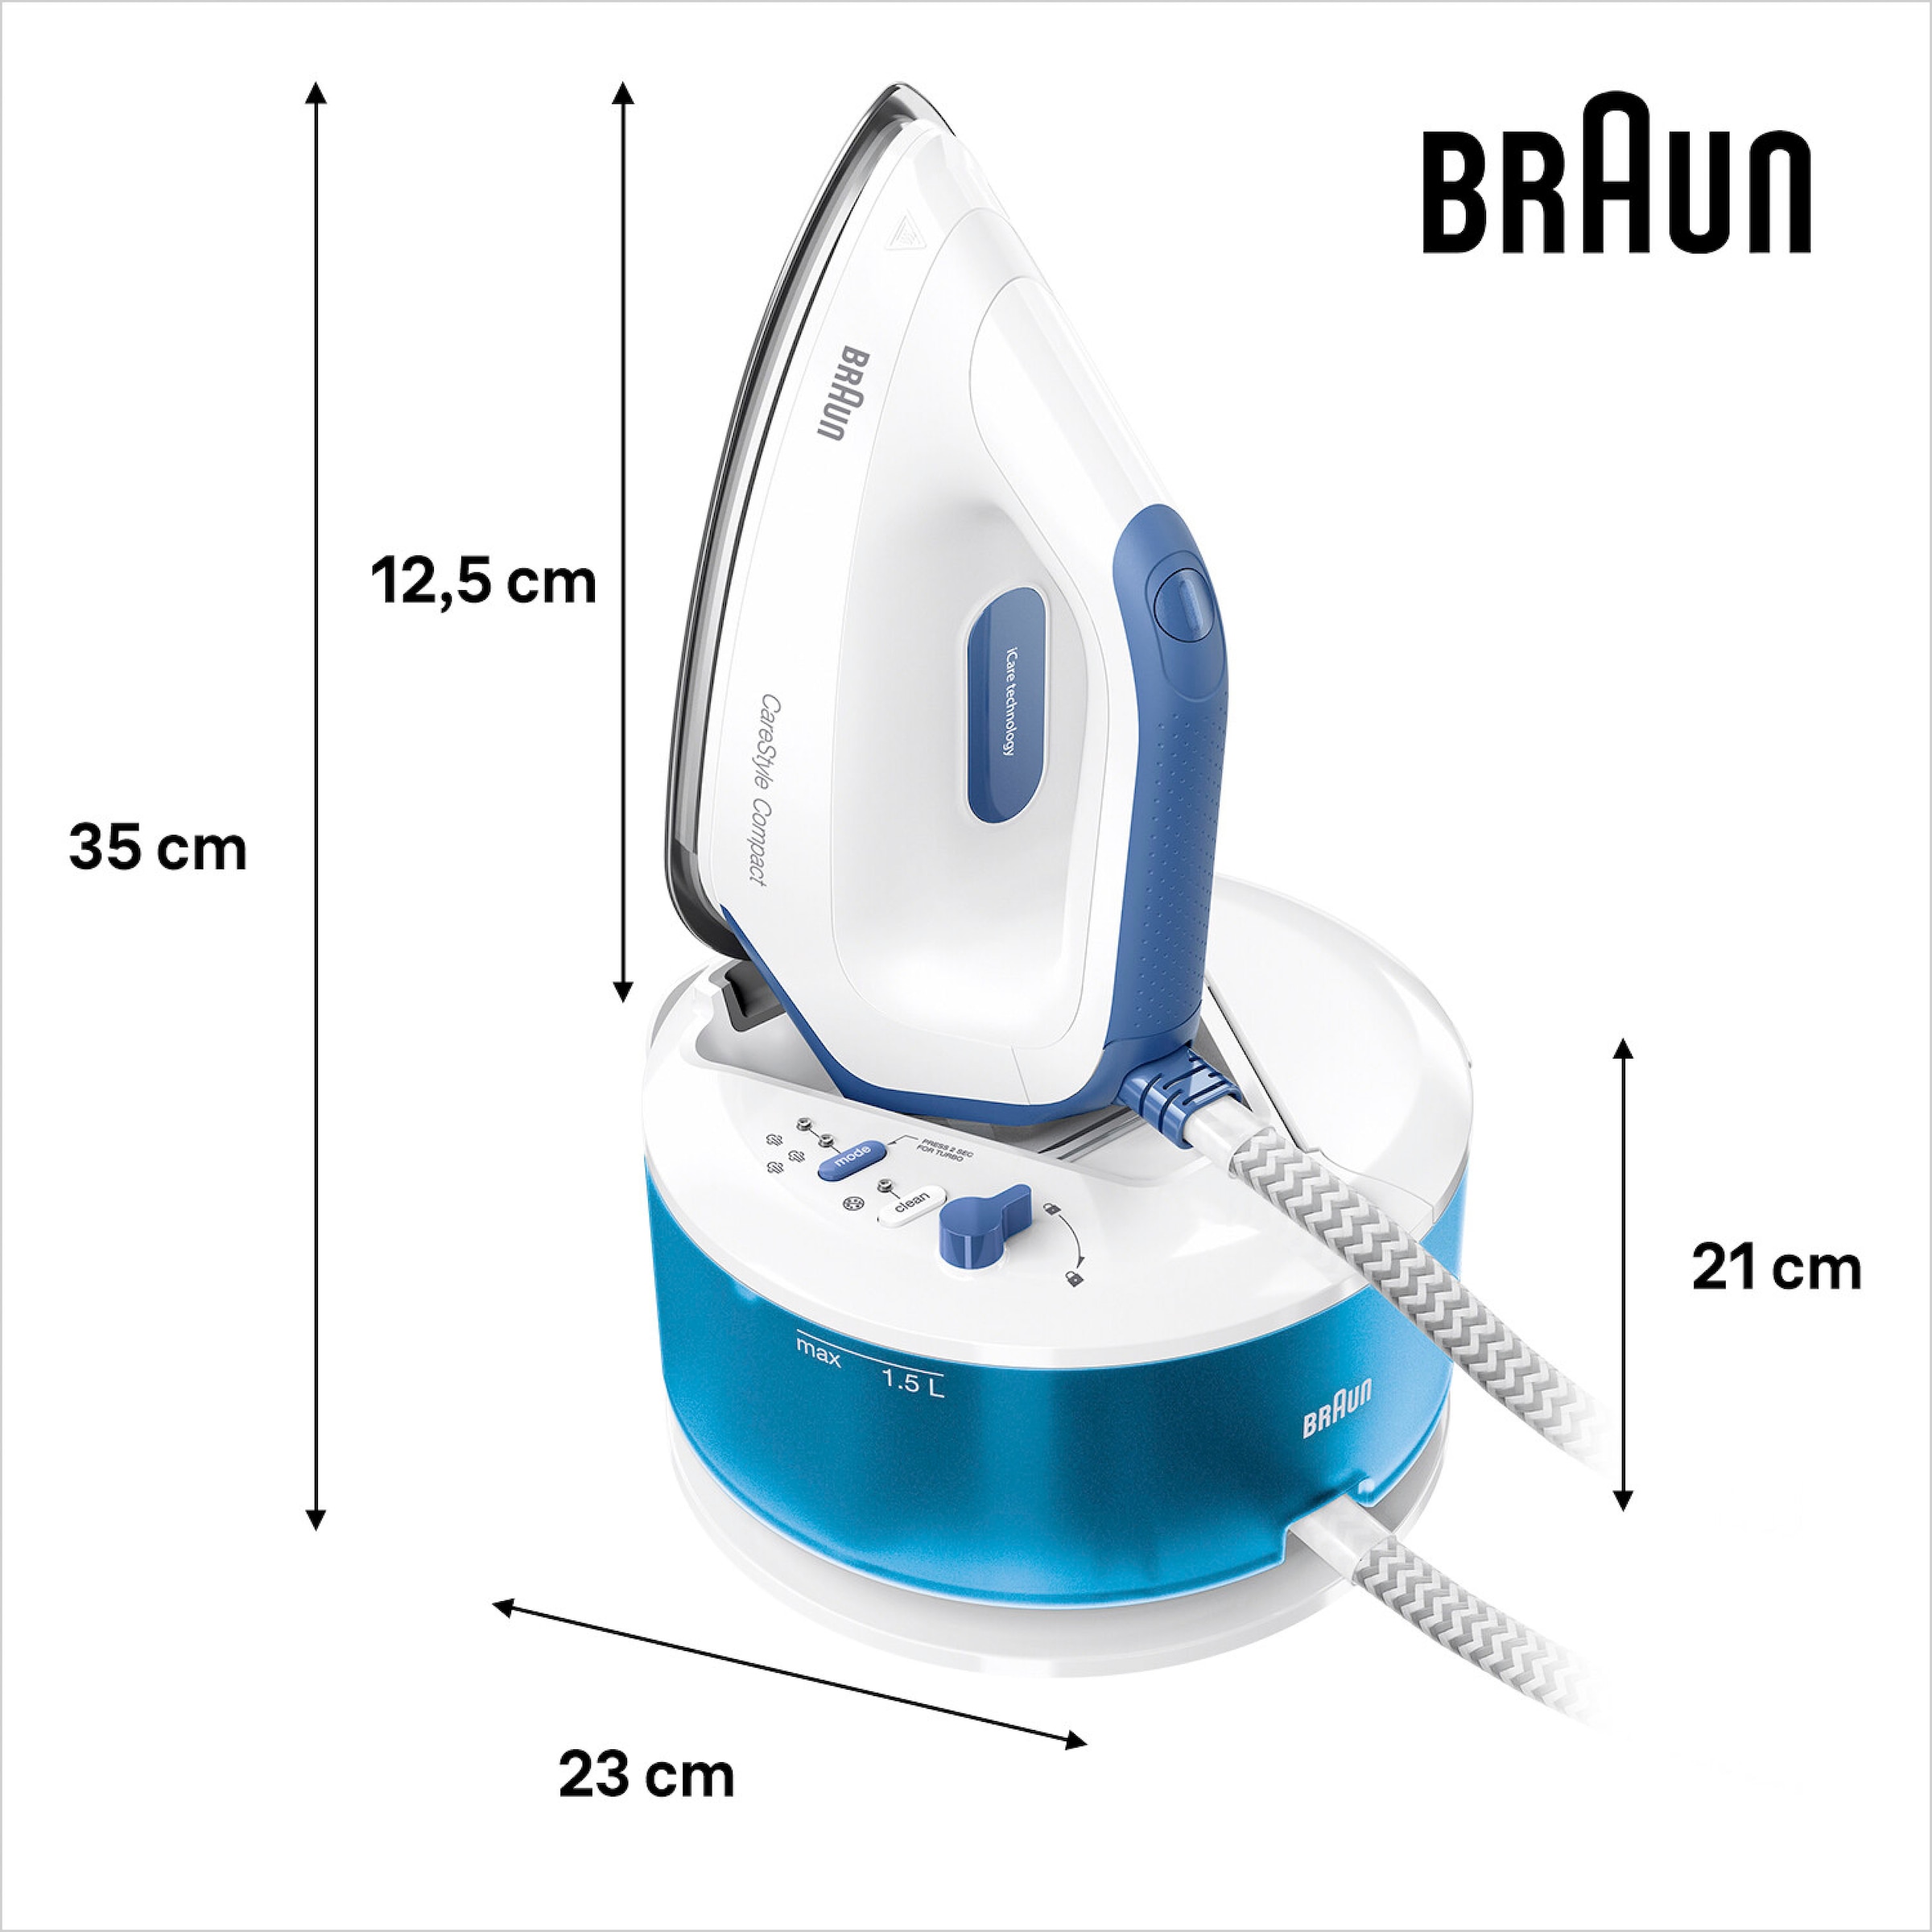 Braun Dampfbügelstation »CareStyle Compact IS2143BL«, blau, max. Dampfmenge  420g/min, Rückwärtsbügeln über Knöpfe kaufen | BAUR